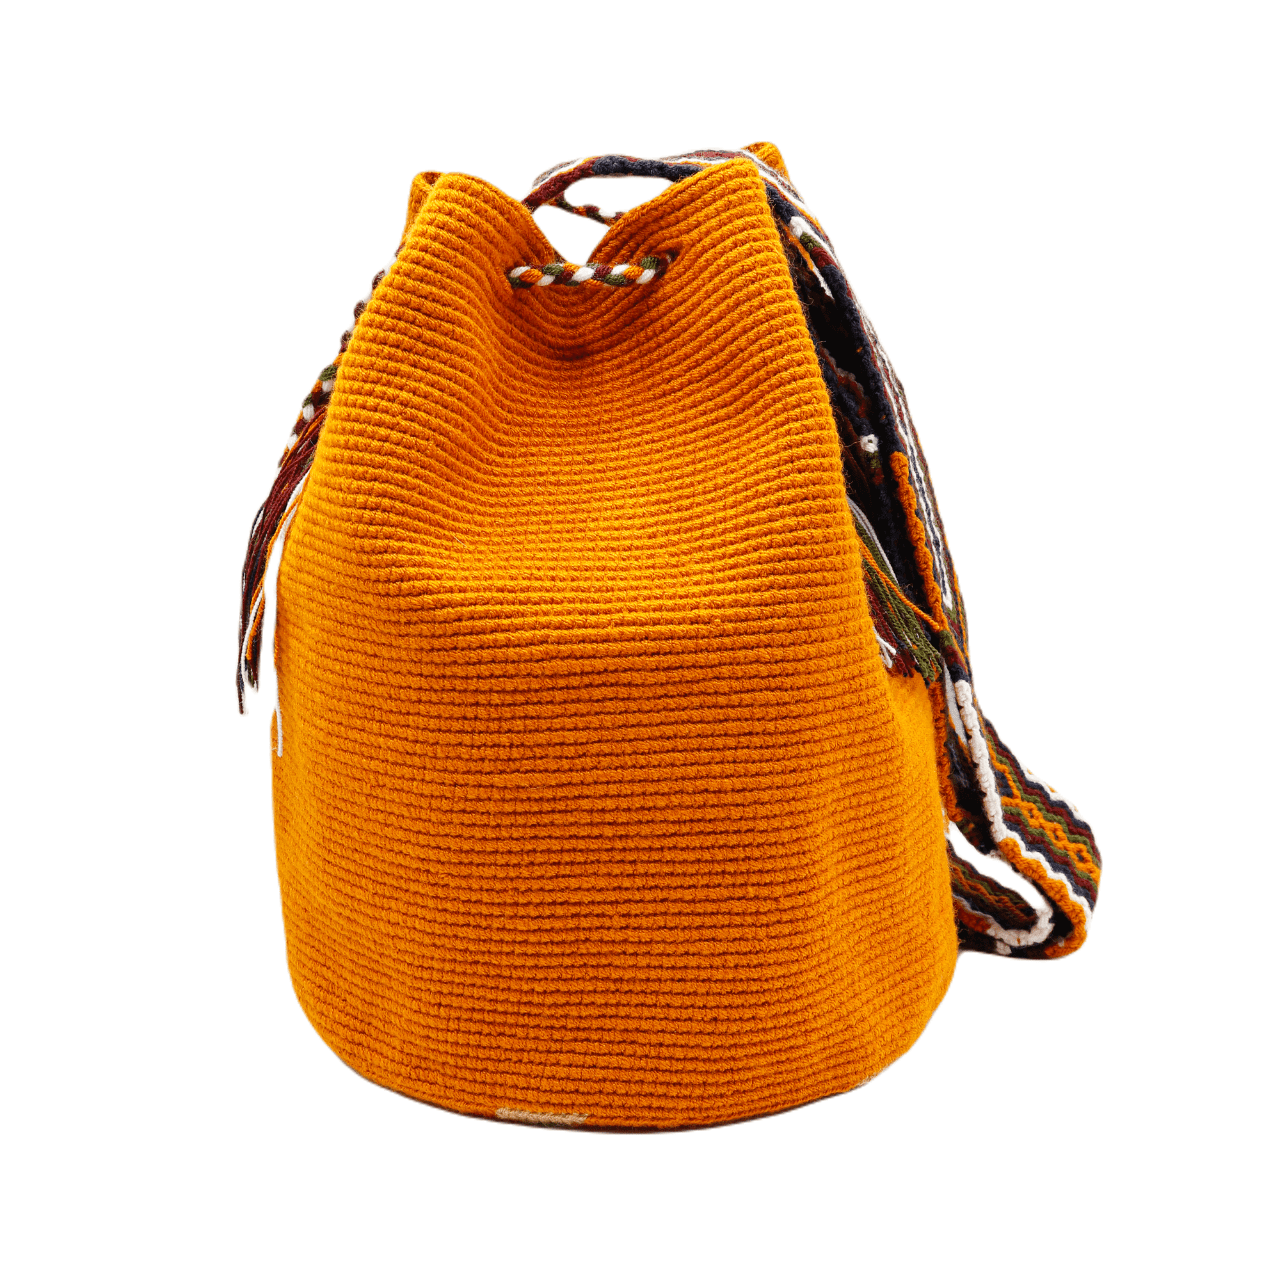 Rae Crochet Bag - Origin Colombia